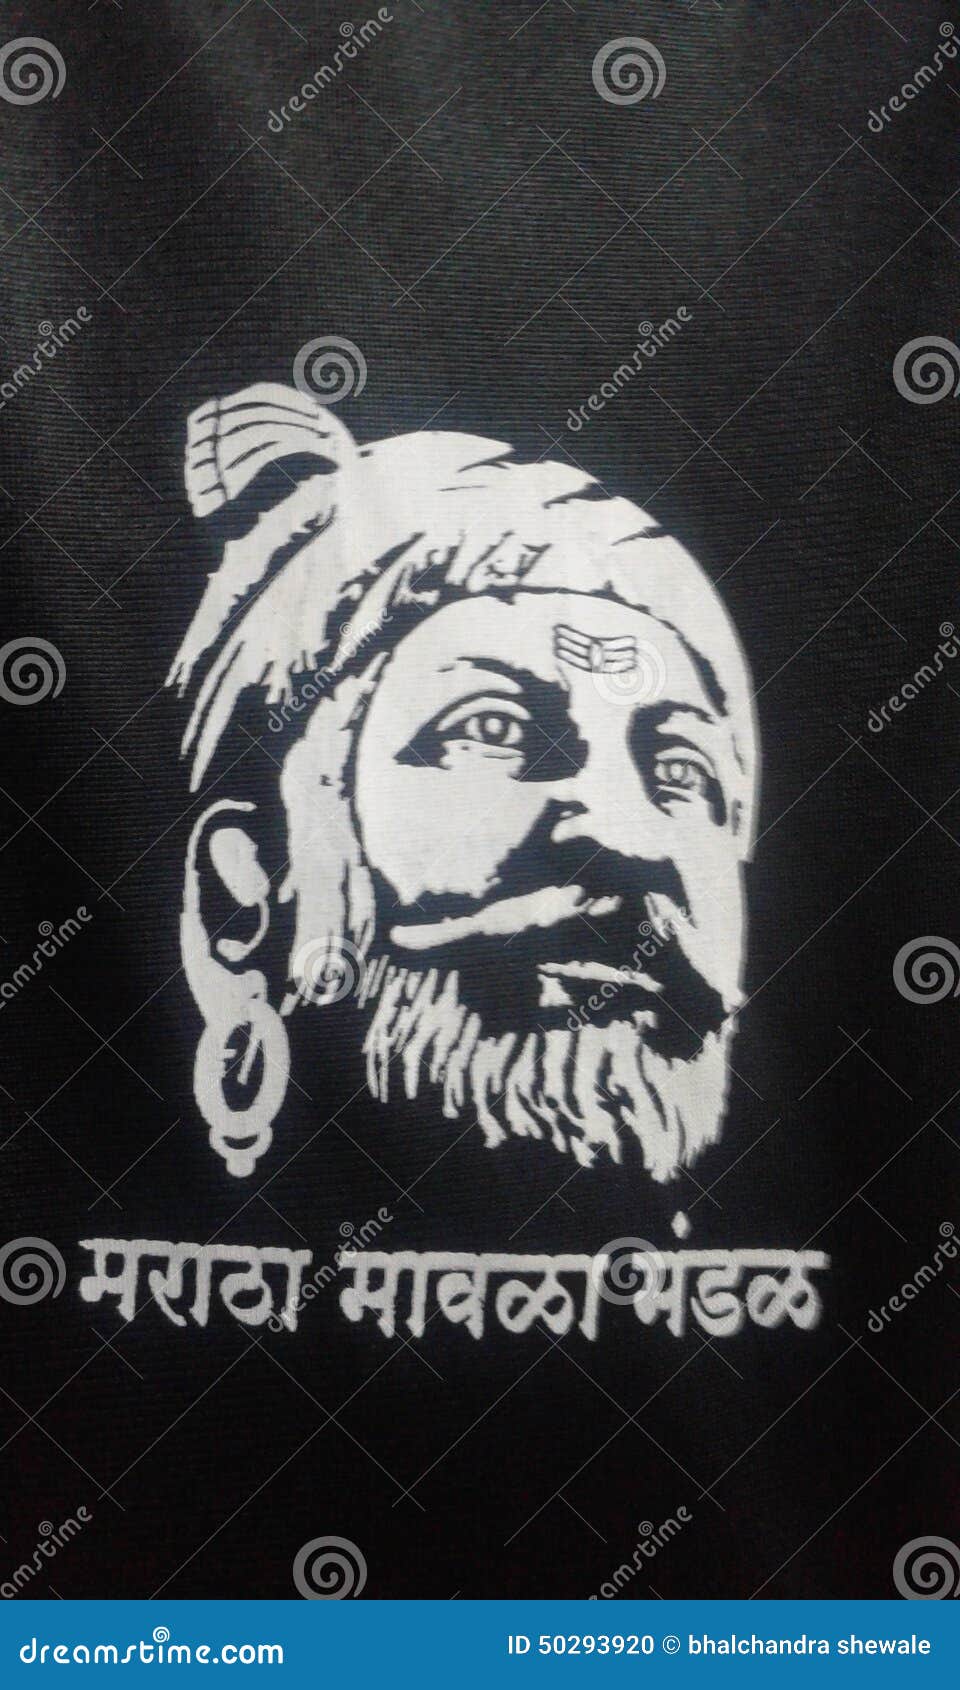 shivaji maharaj logo 2 by David | Shivaji maharaj hd wallpaper, Galaxy  wallpaper, Hd wallpapers 1080p